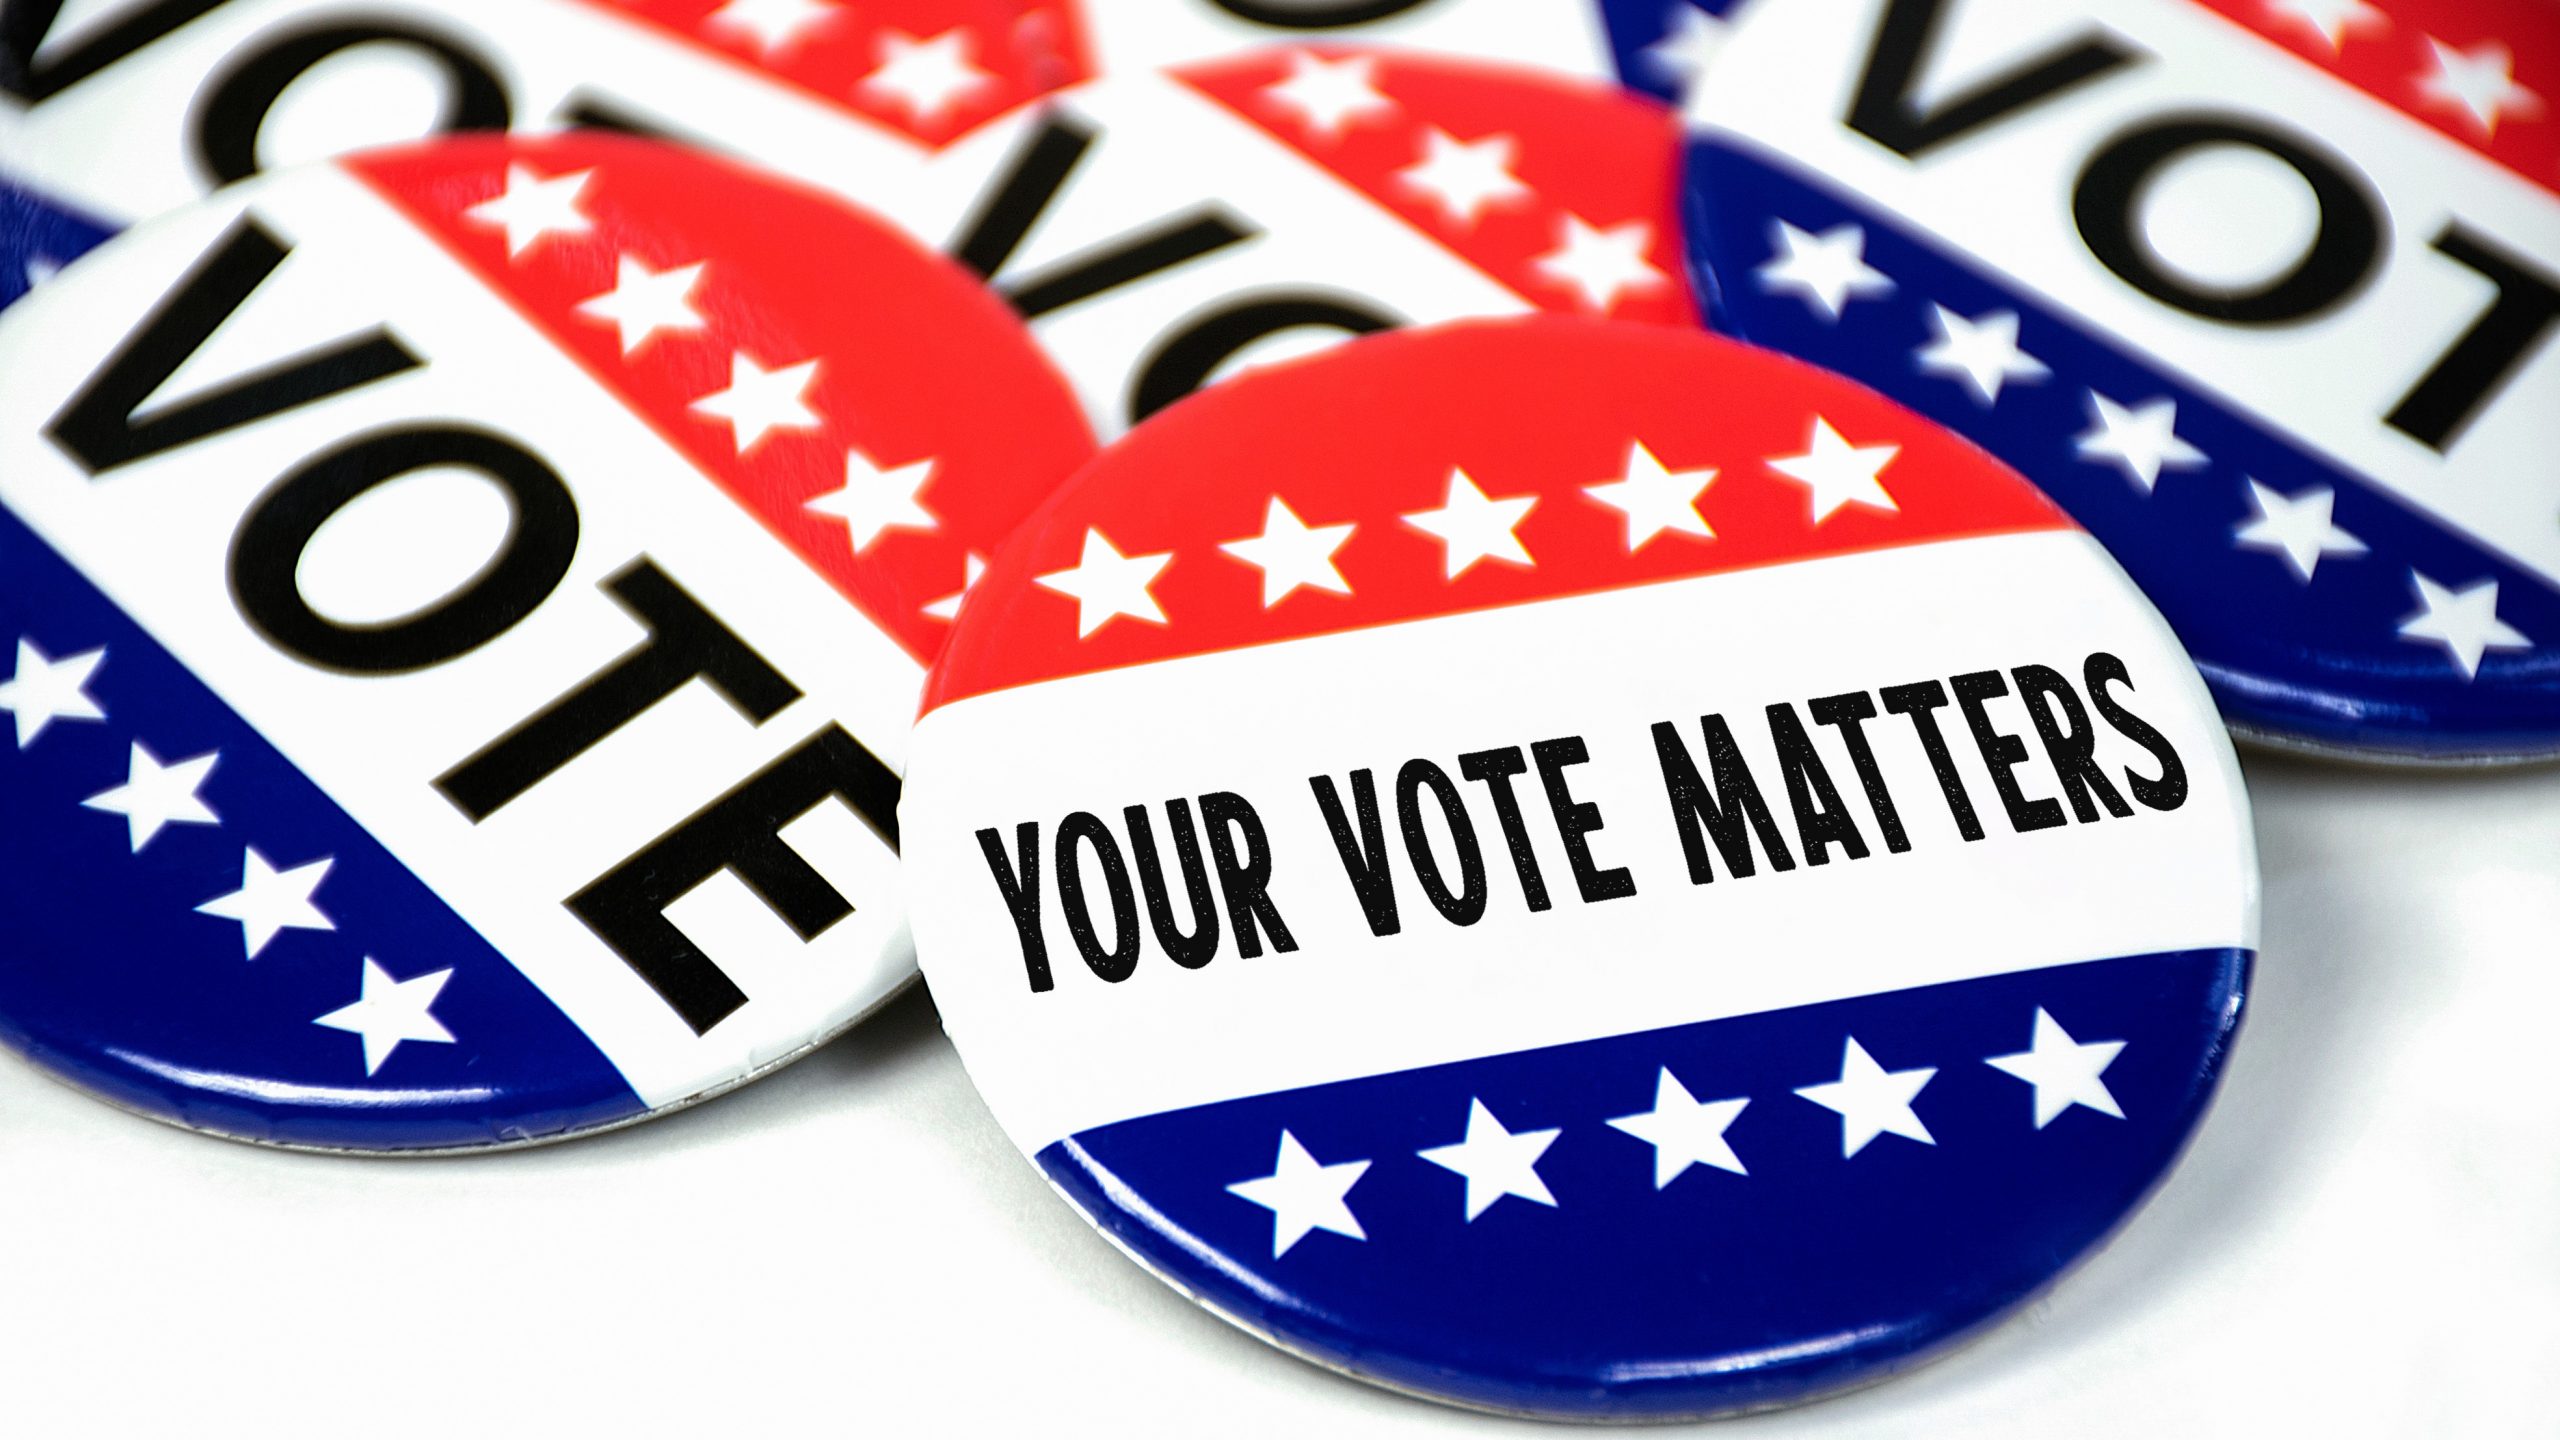 PERCLE: VA ELECT Offers Voters a False Sense of Security